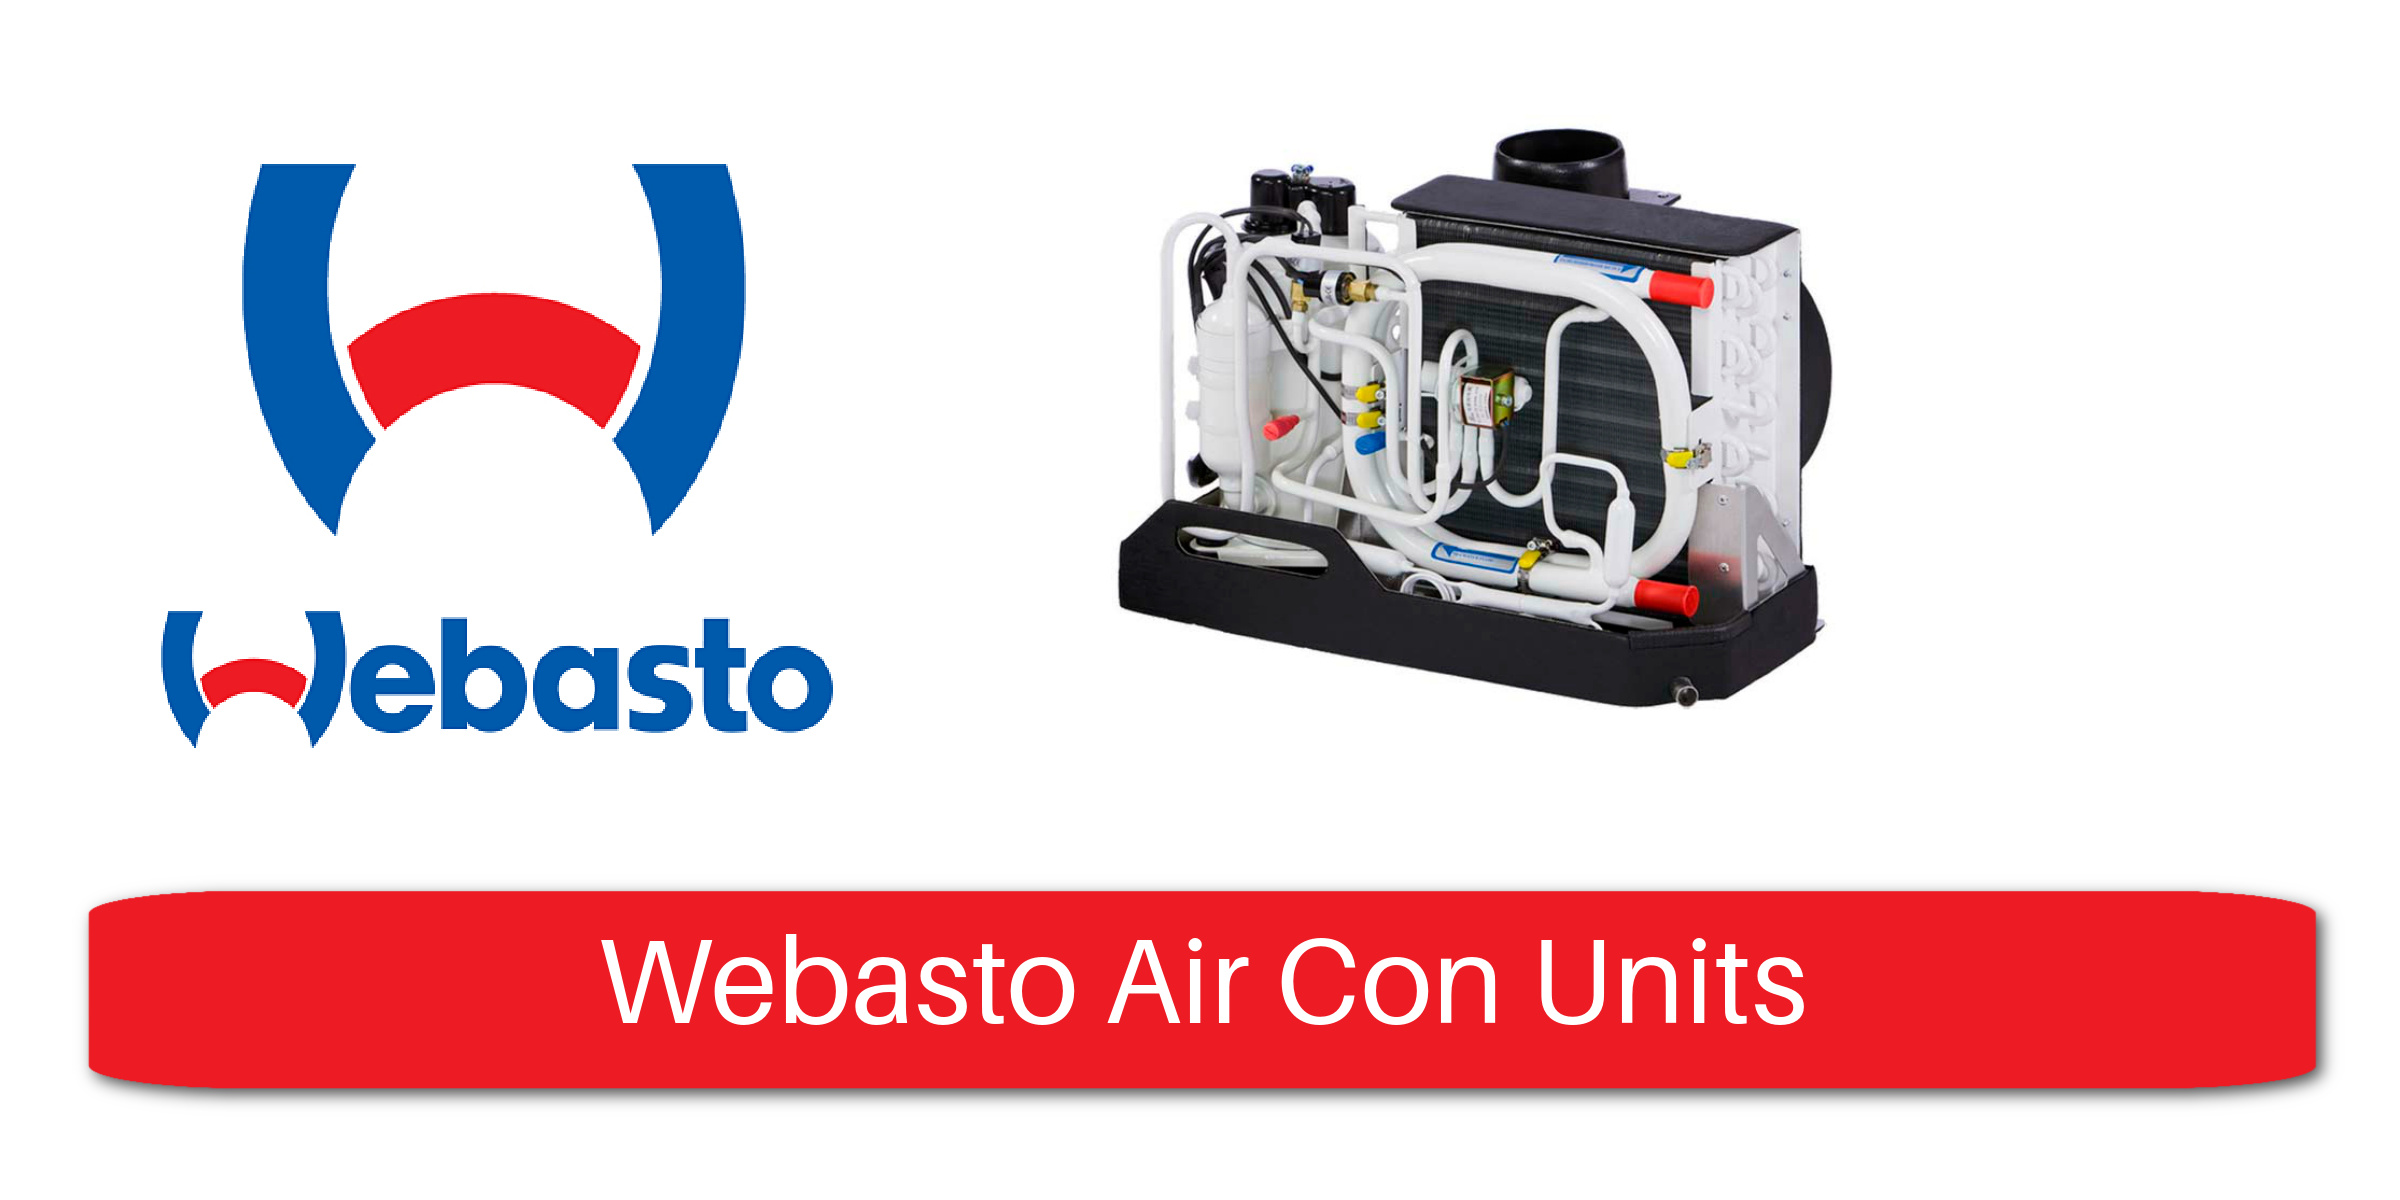 Webasto Air Conditioning Units